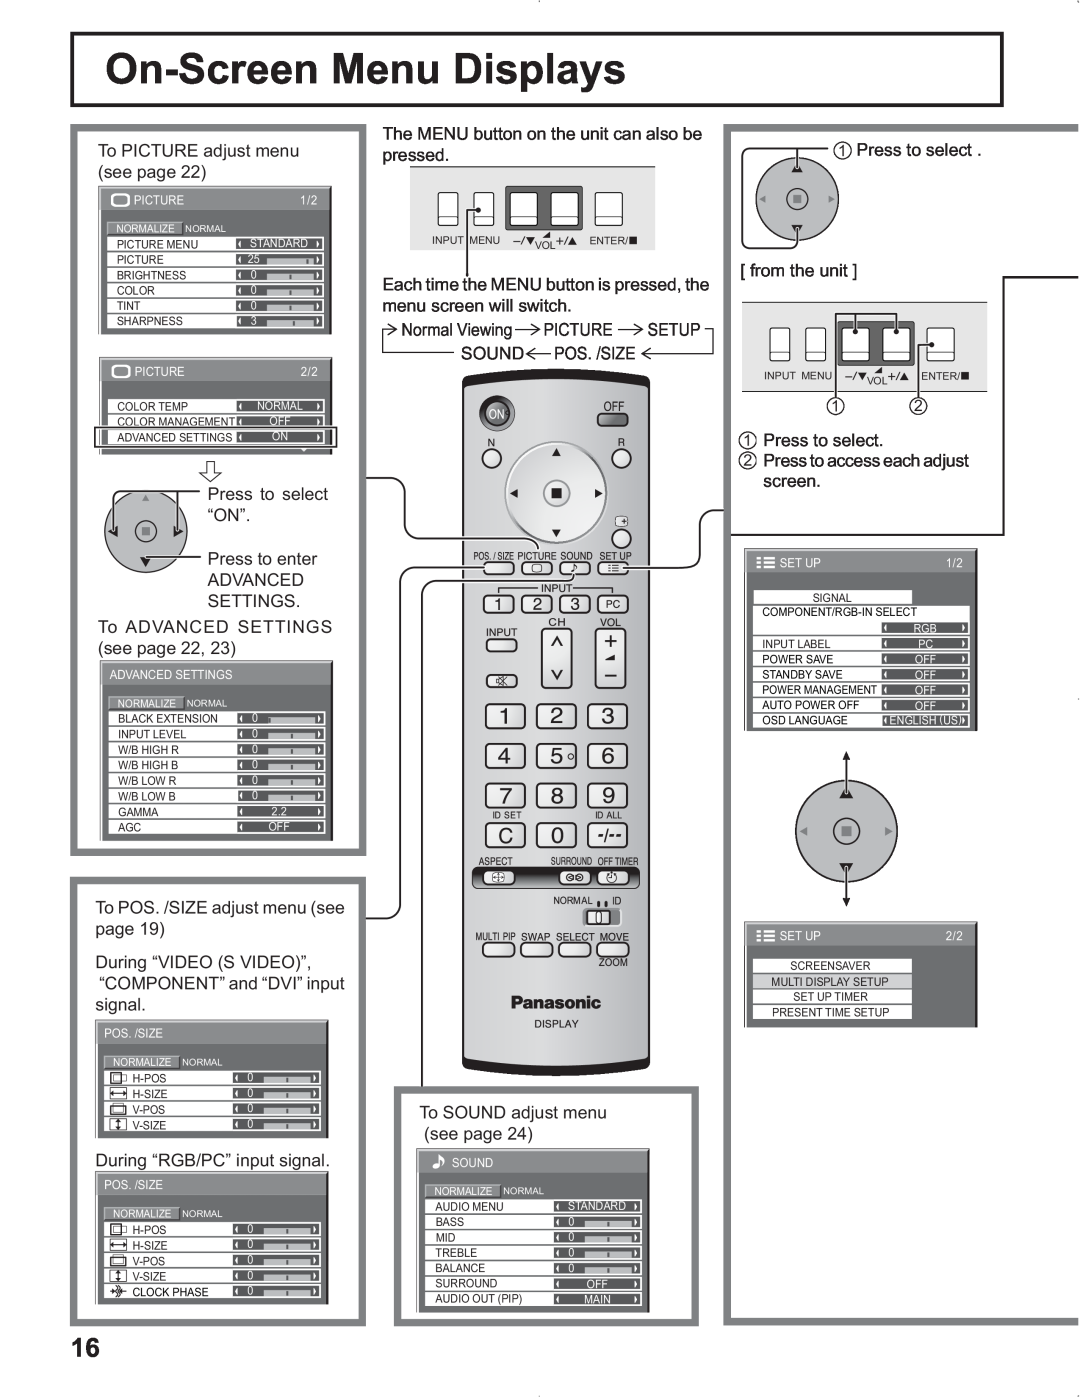 Panasonic TH-37PR9U manual On-Screen Menu Displays, Clock Phase, Power Save, Standby Save, Auto Power Off, Osd Language 